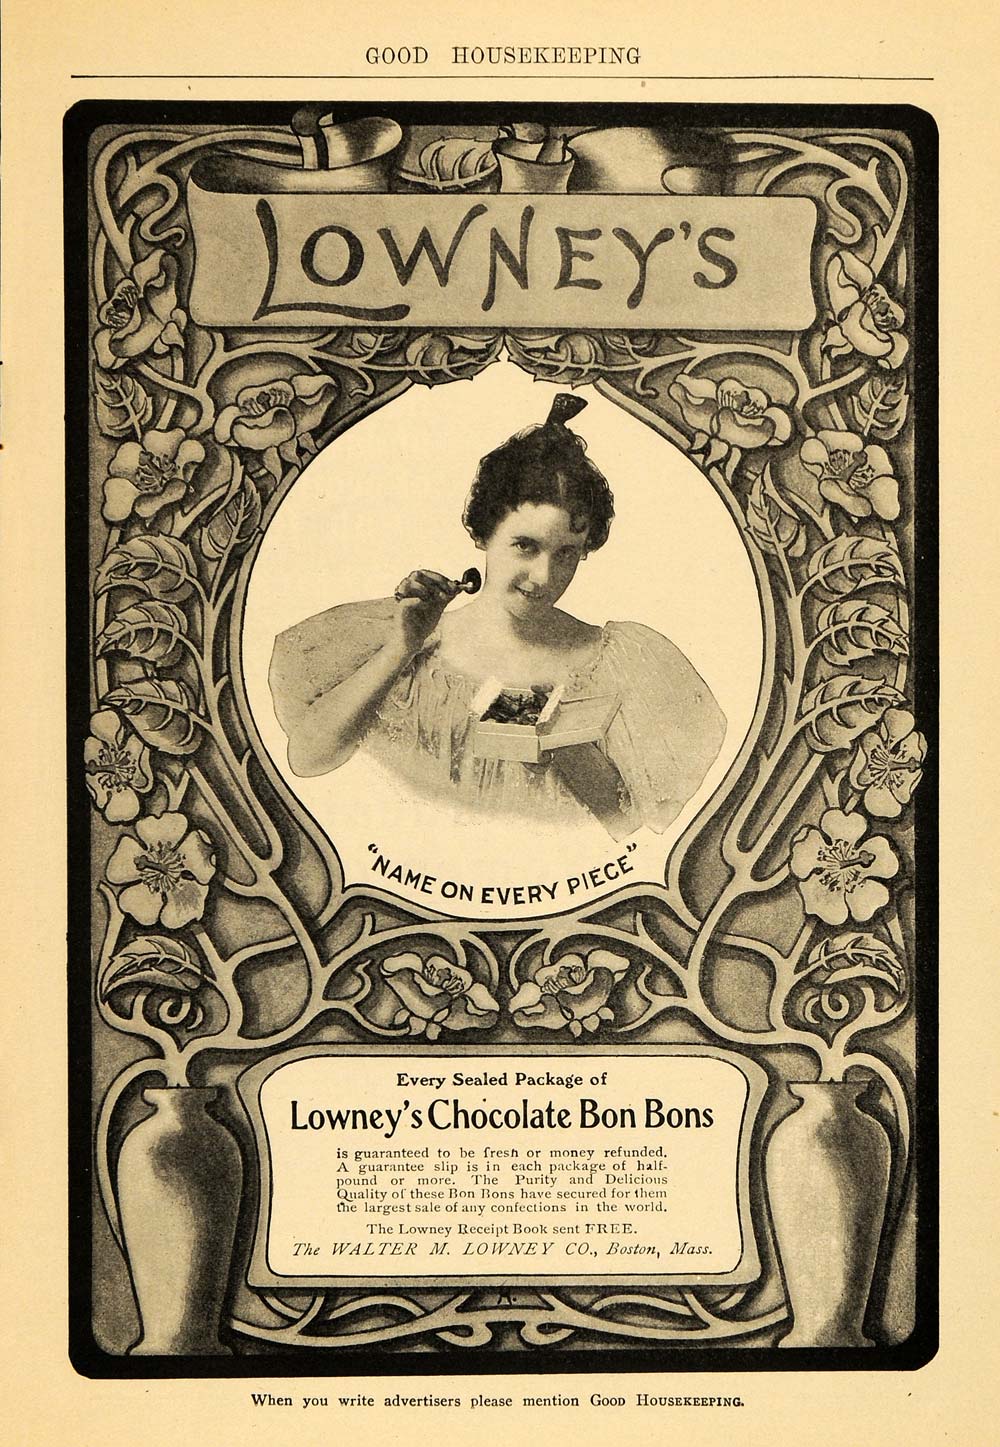 1904 Ad Walter M. Lowney's Chocolate Bon Bons Candy - ORIGINAL ADVERTISING GH2